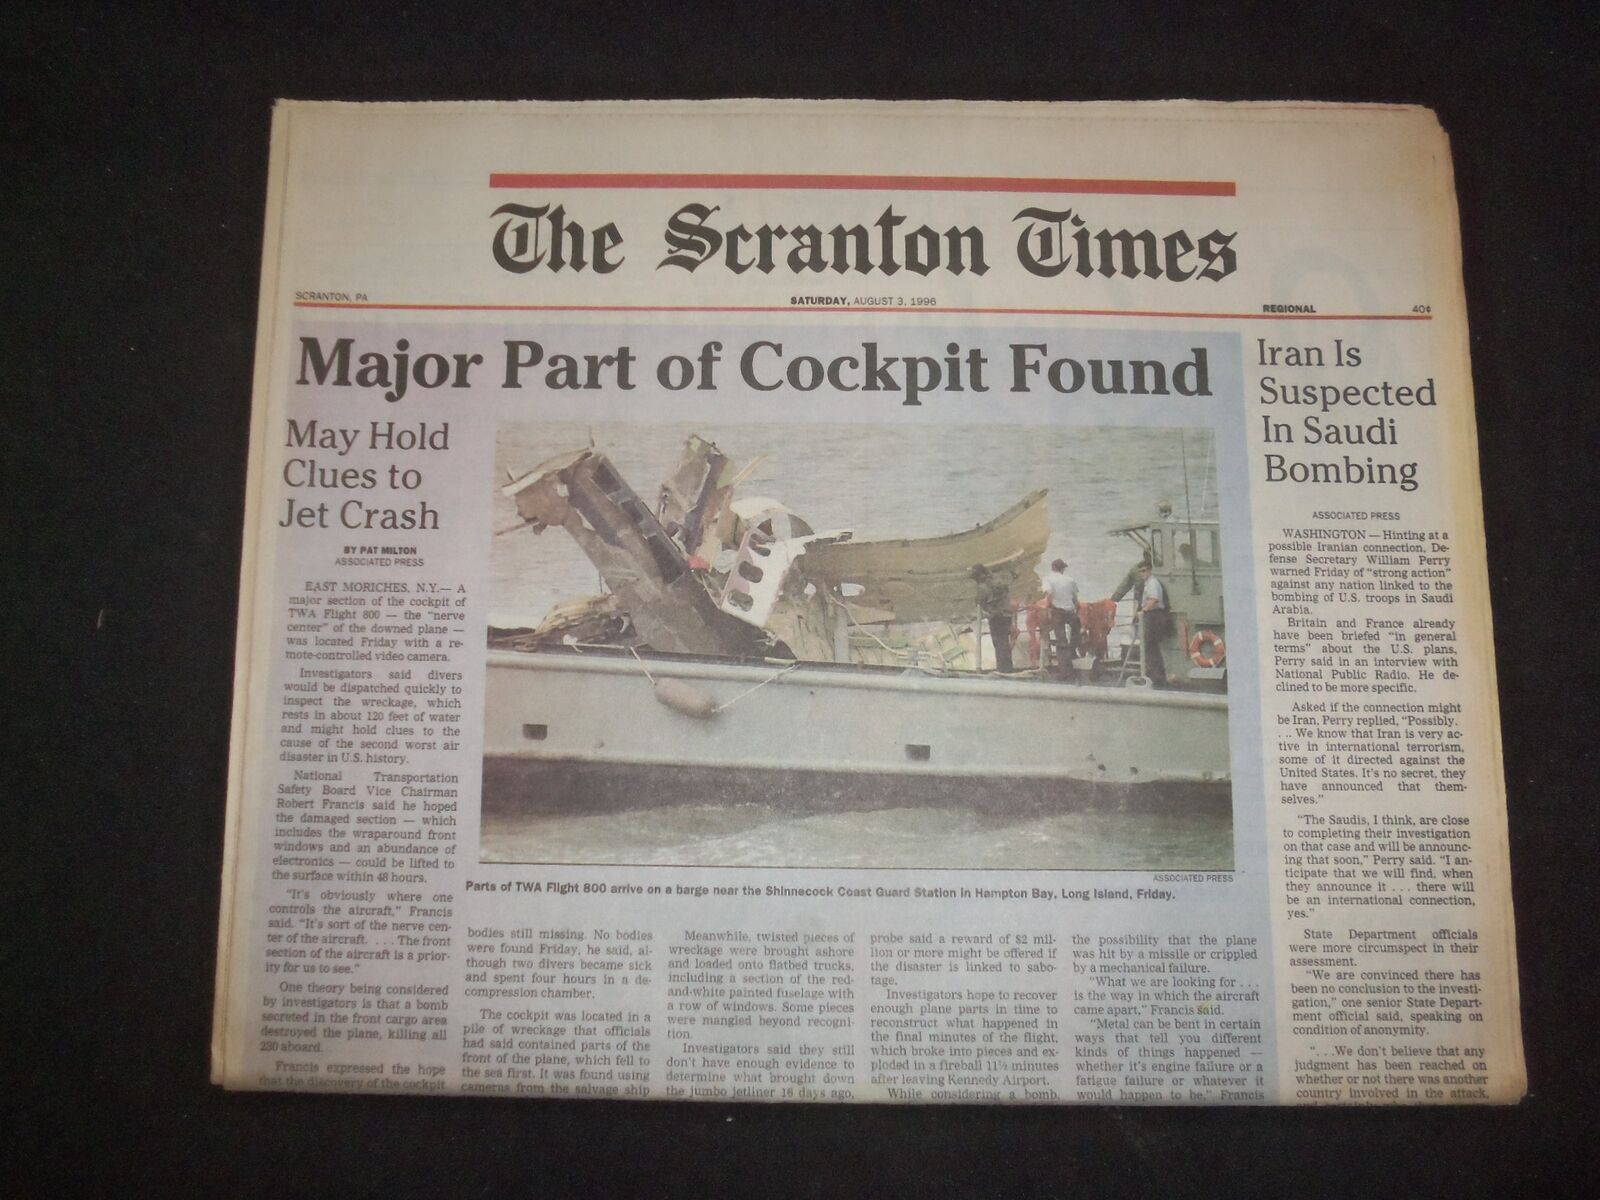 1996 AUG 3 THE SCRANTON TIMES NEWSPAPER - COCKPIT OF FLIGHT 800 FOUND - NP 8355